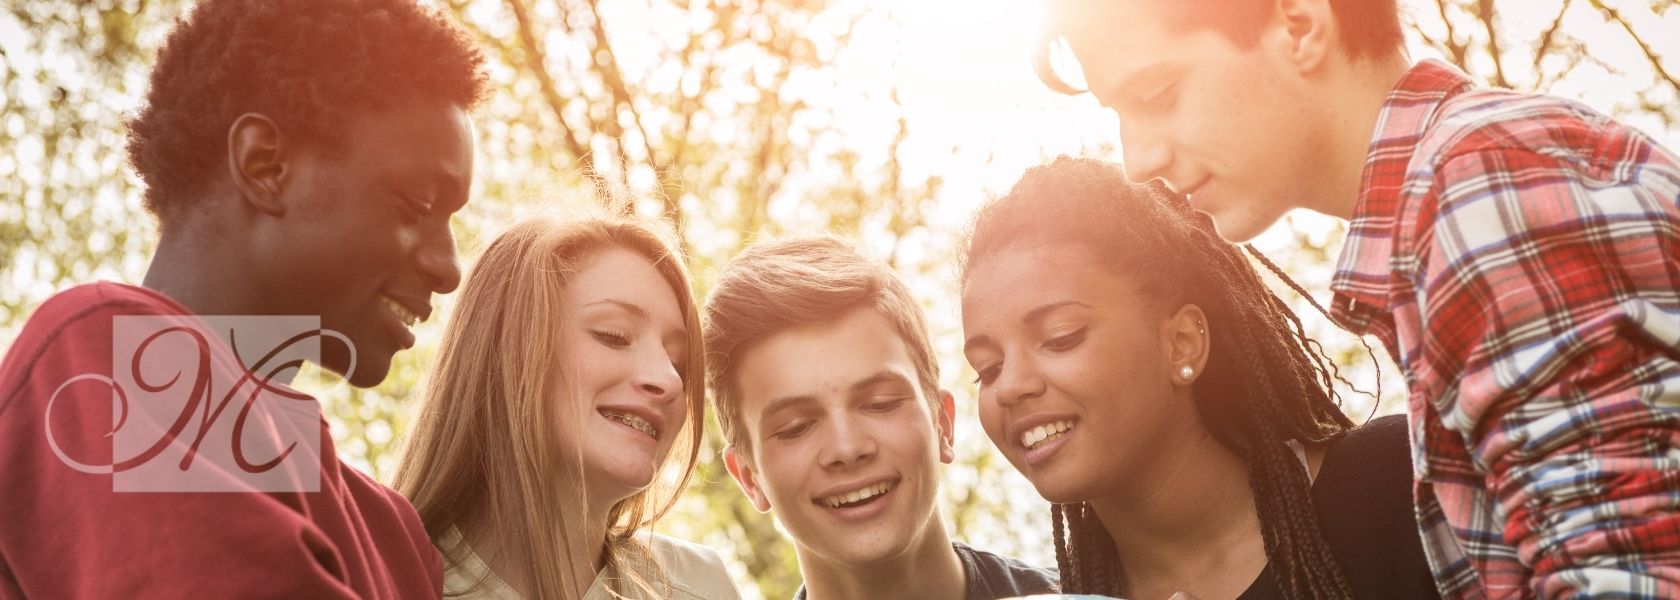 Ortho For Teens header - Teens Smiling Outside